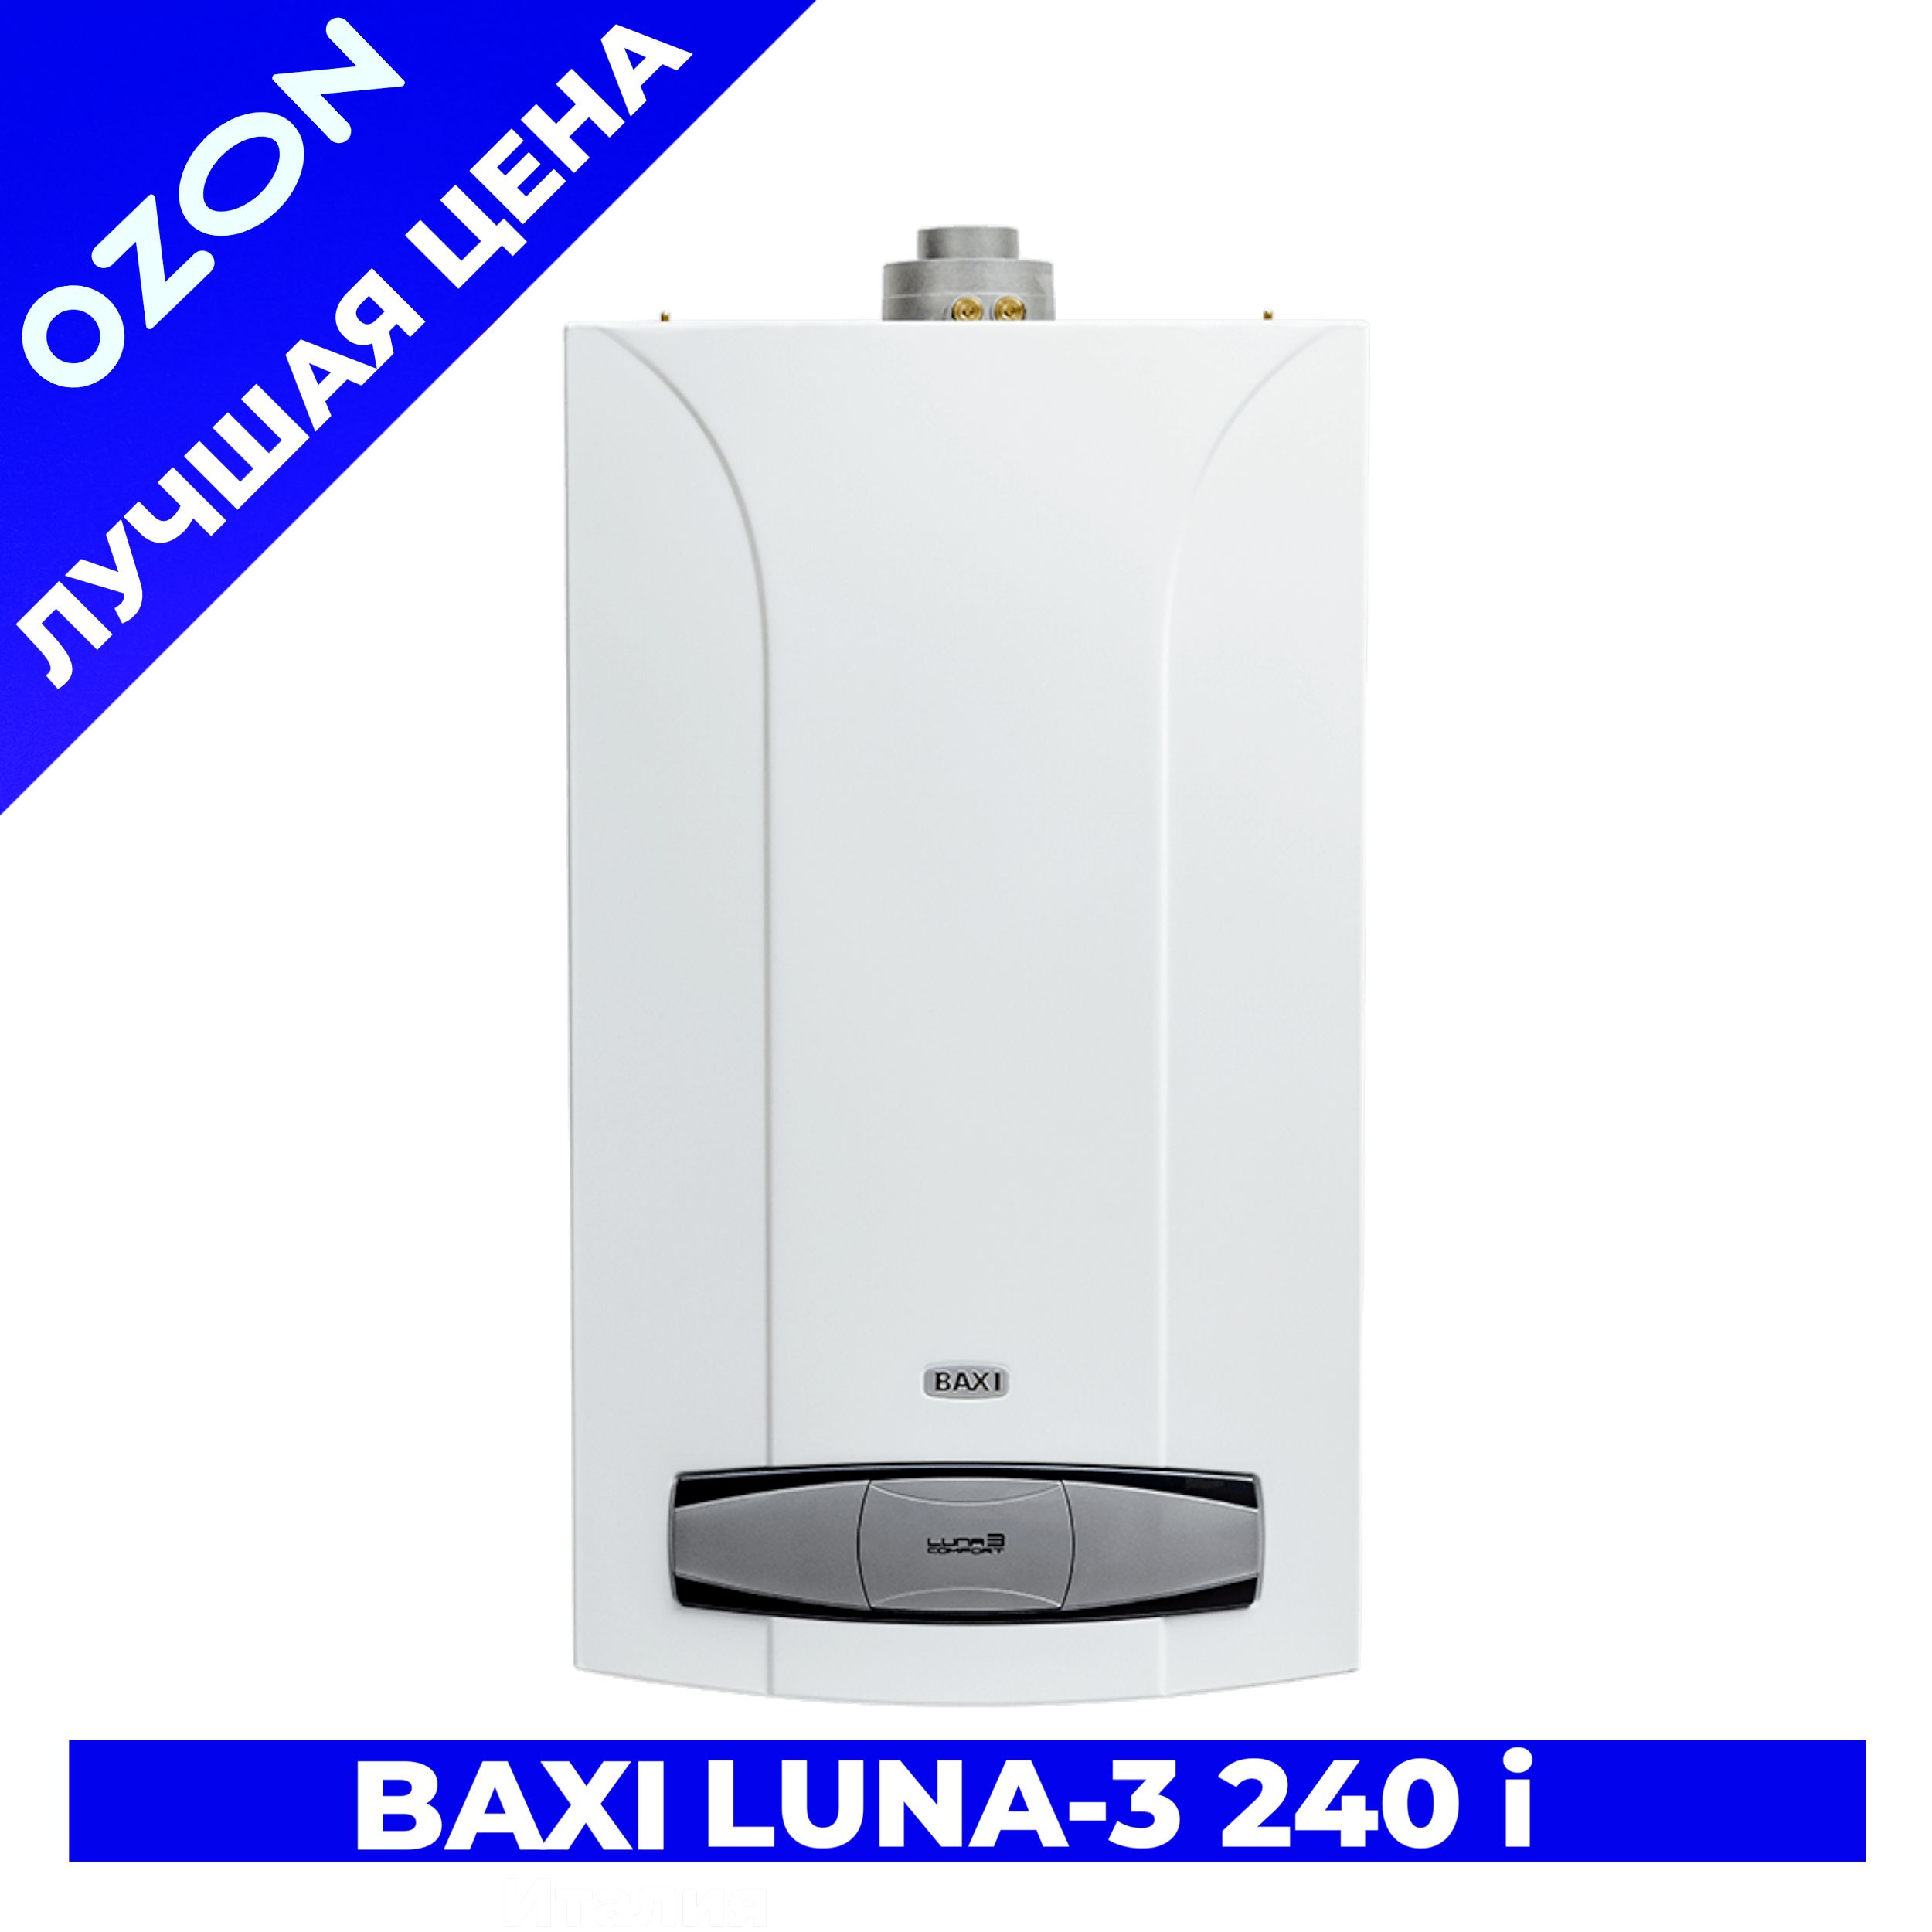 Бакси луна 3 1.310 fi. Baxi Luna 3 Comfort 1.240. Газовый котел Baxi Luna-3 1.310 Fi 31 КВТ одноконтурный. Baxi Luna-3 Comfort 1.240 Fi. Baxi Luna 3 310.